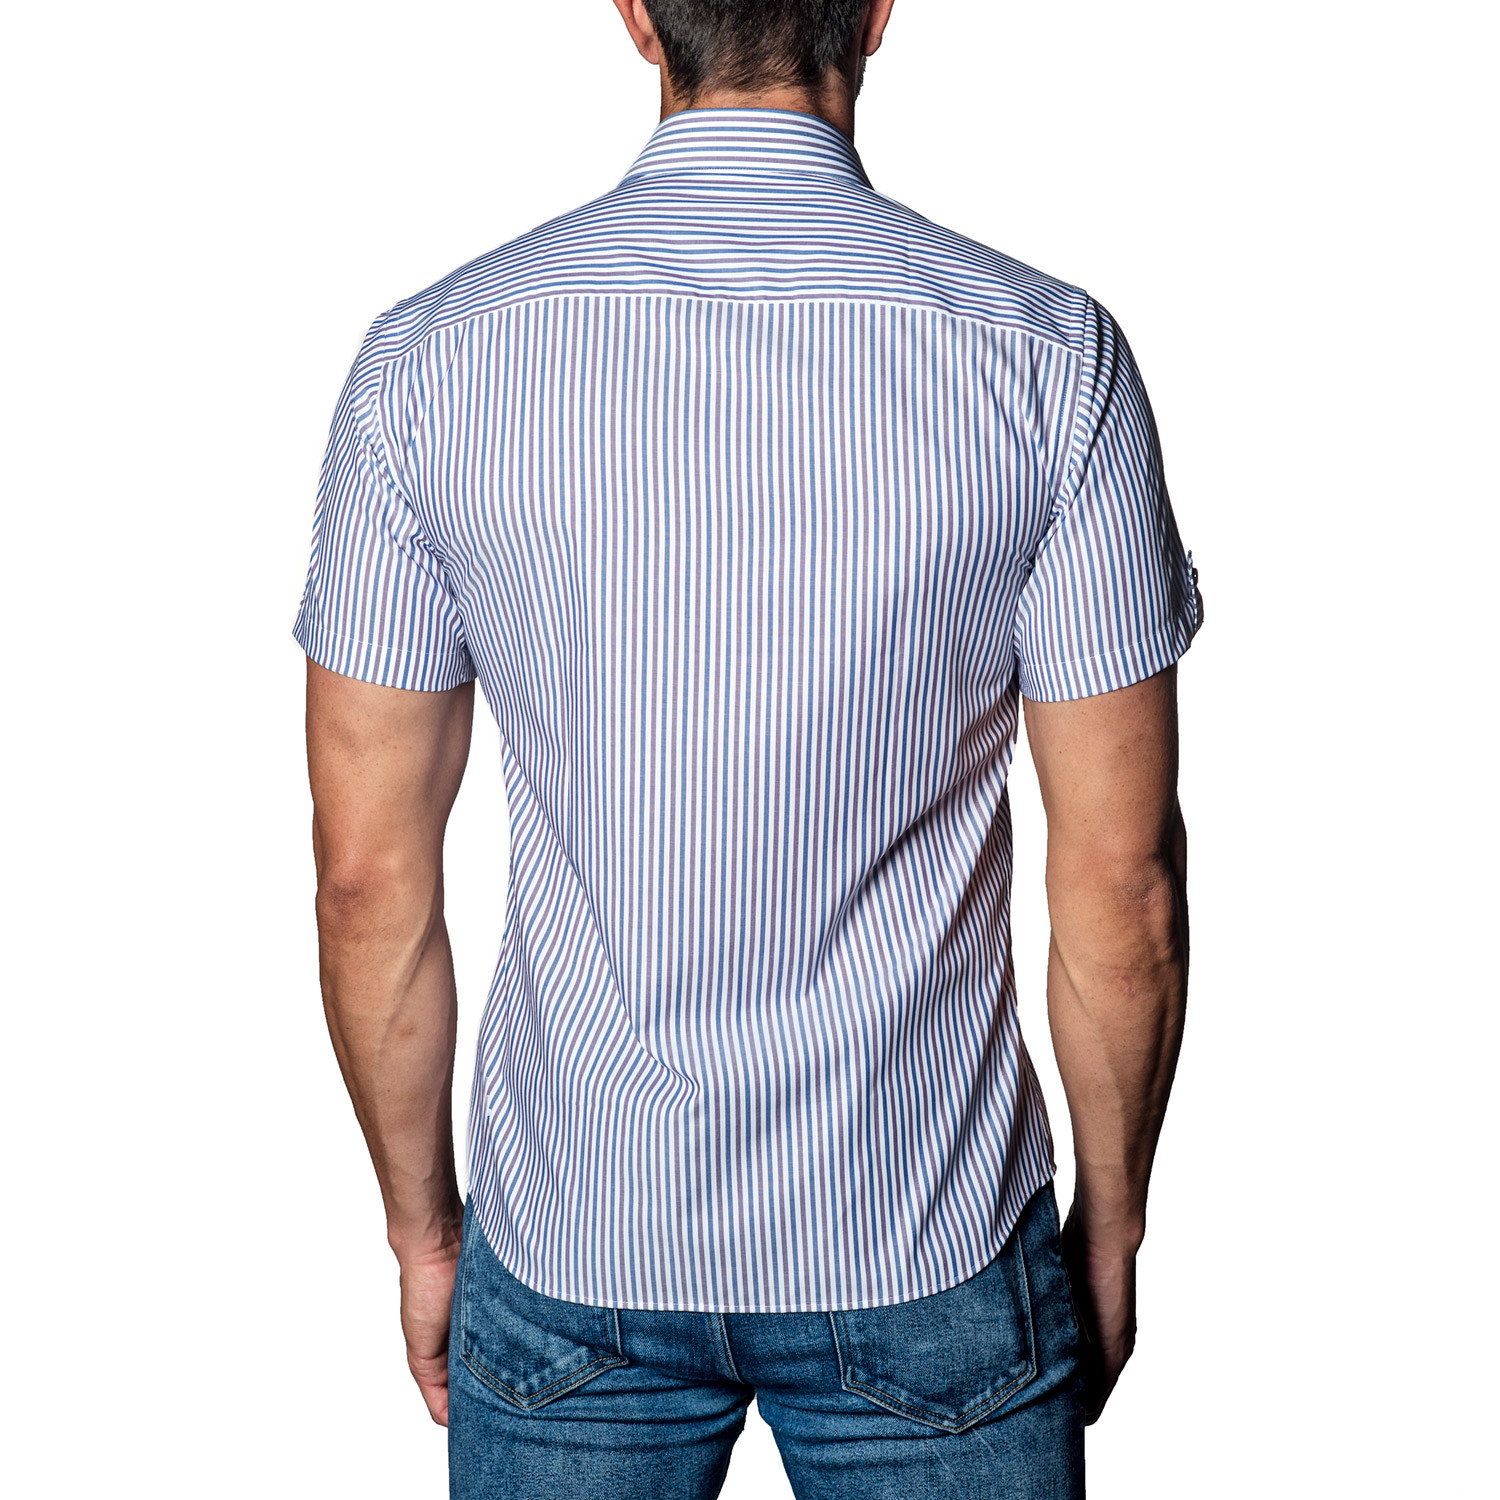 Striped Short Sleeve Shirt White Blue Brown M